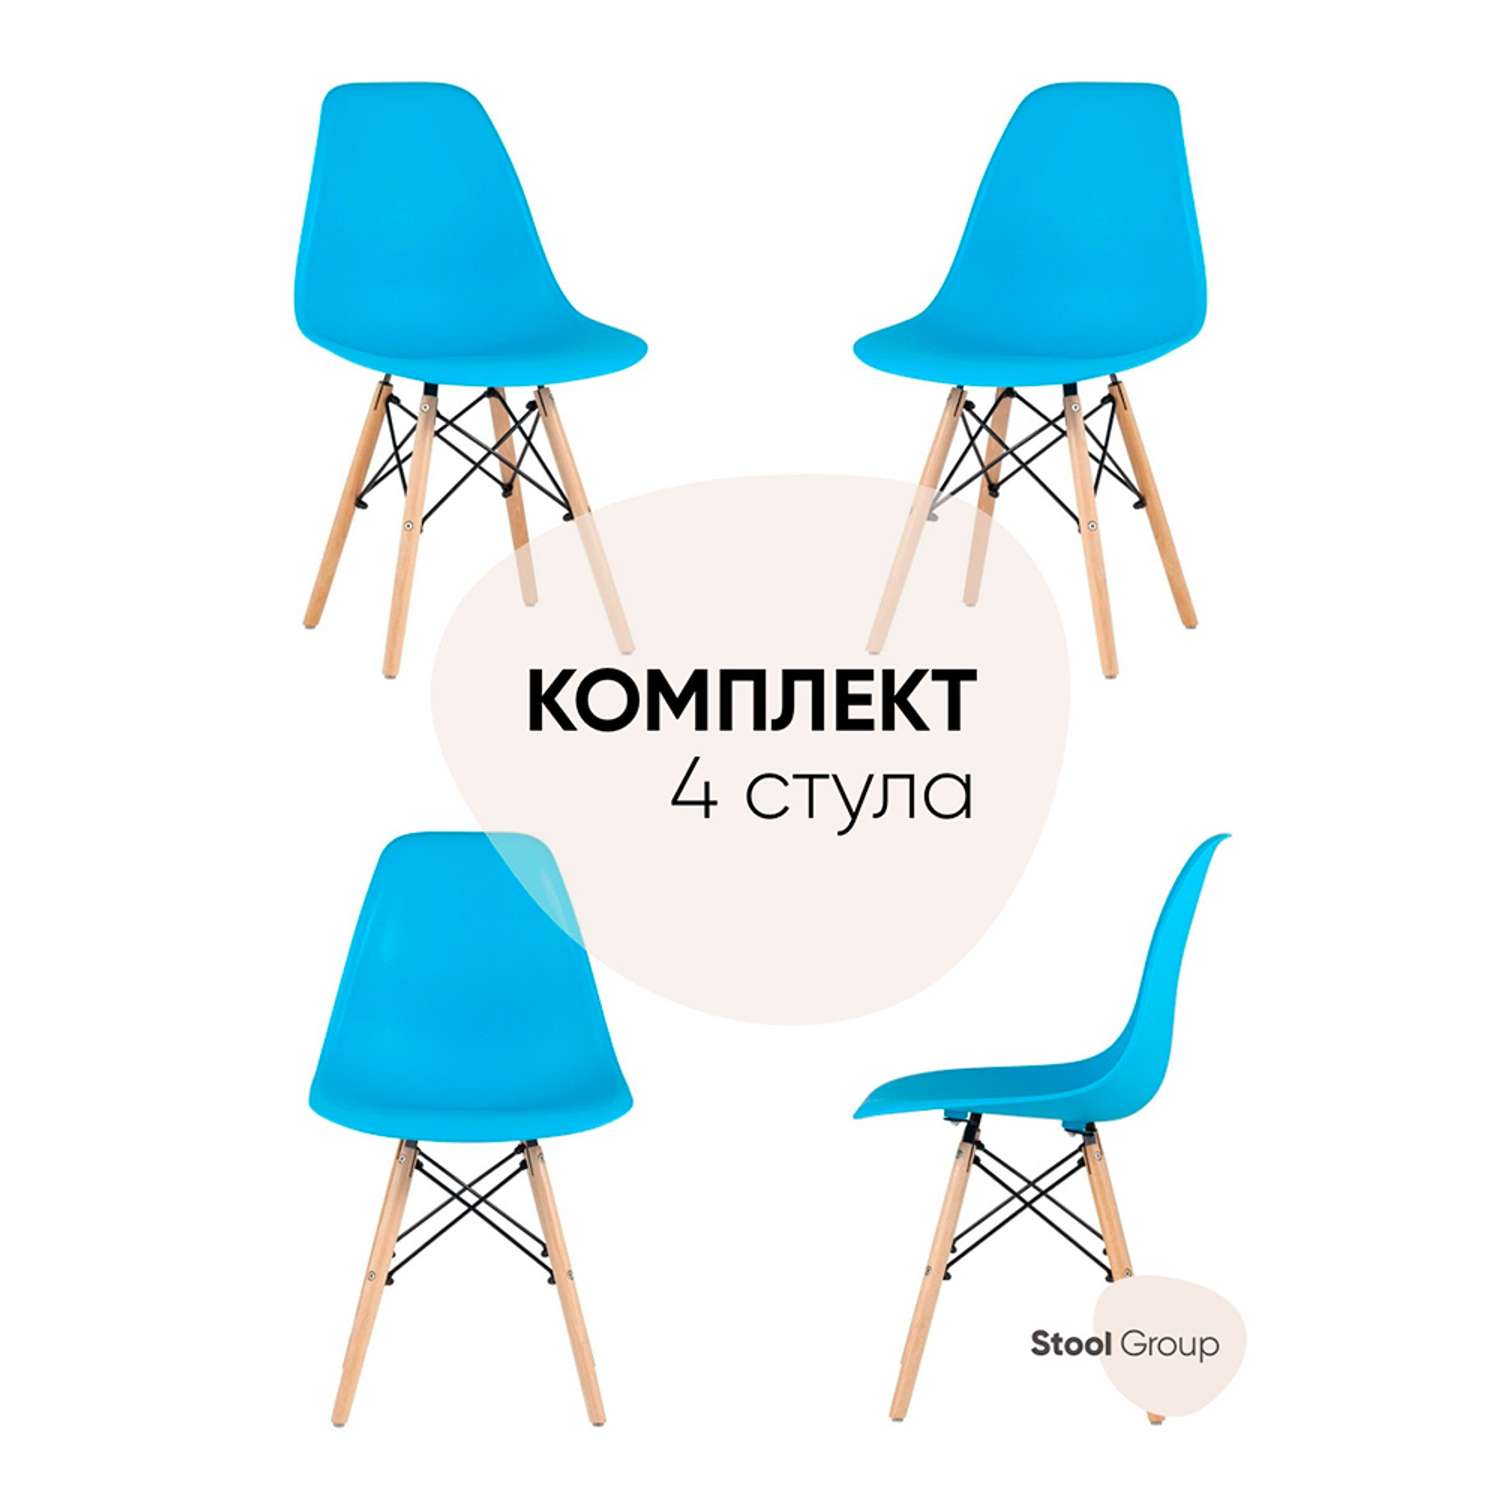 Комплект стульев Stool Group DSW Style голубой - фото 1